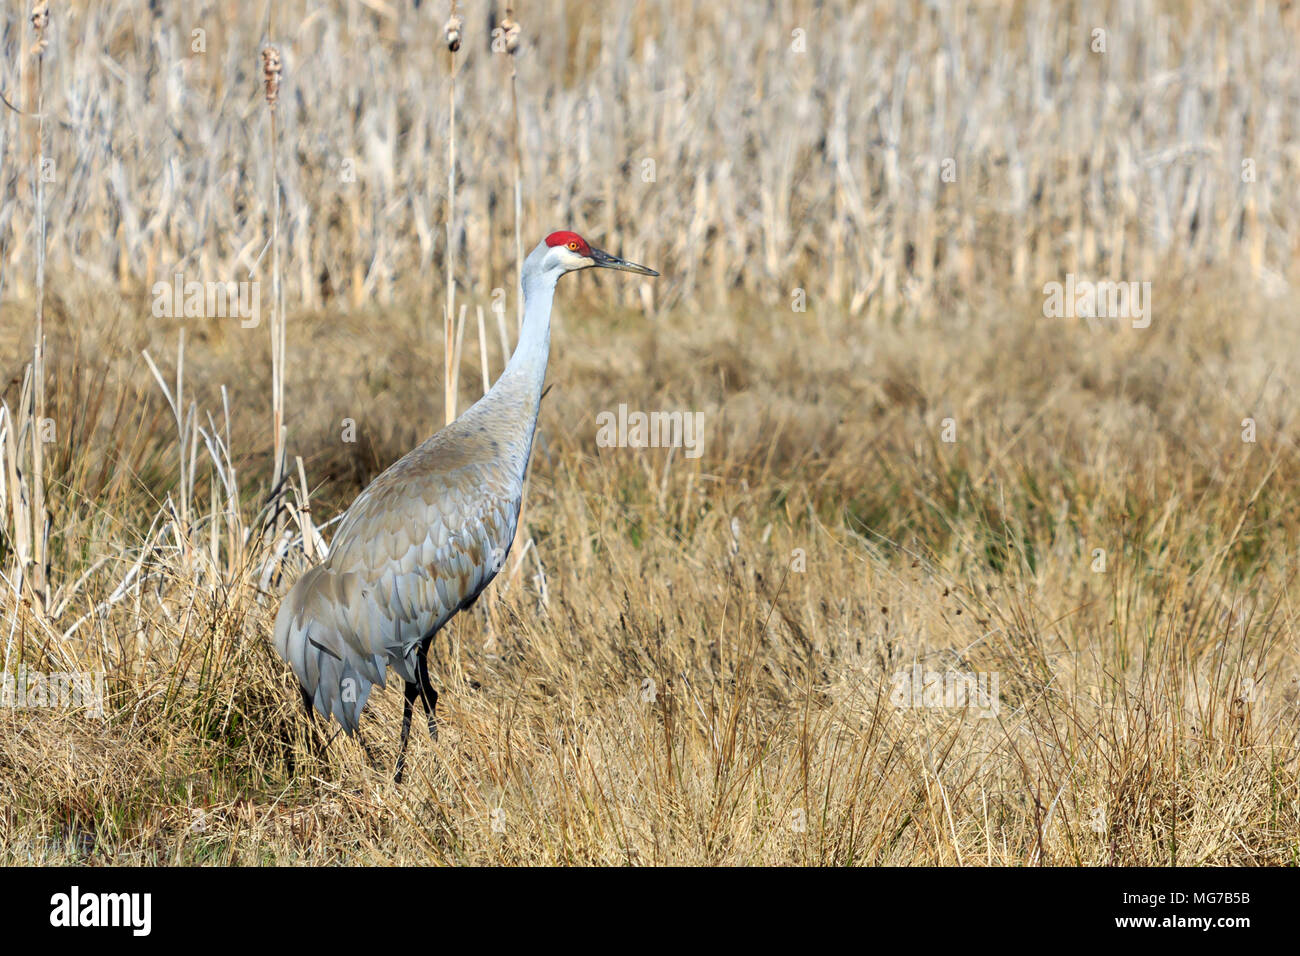 Sandhill Crane walking in long grass Stock Photo